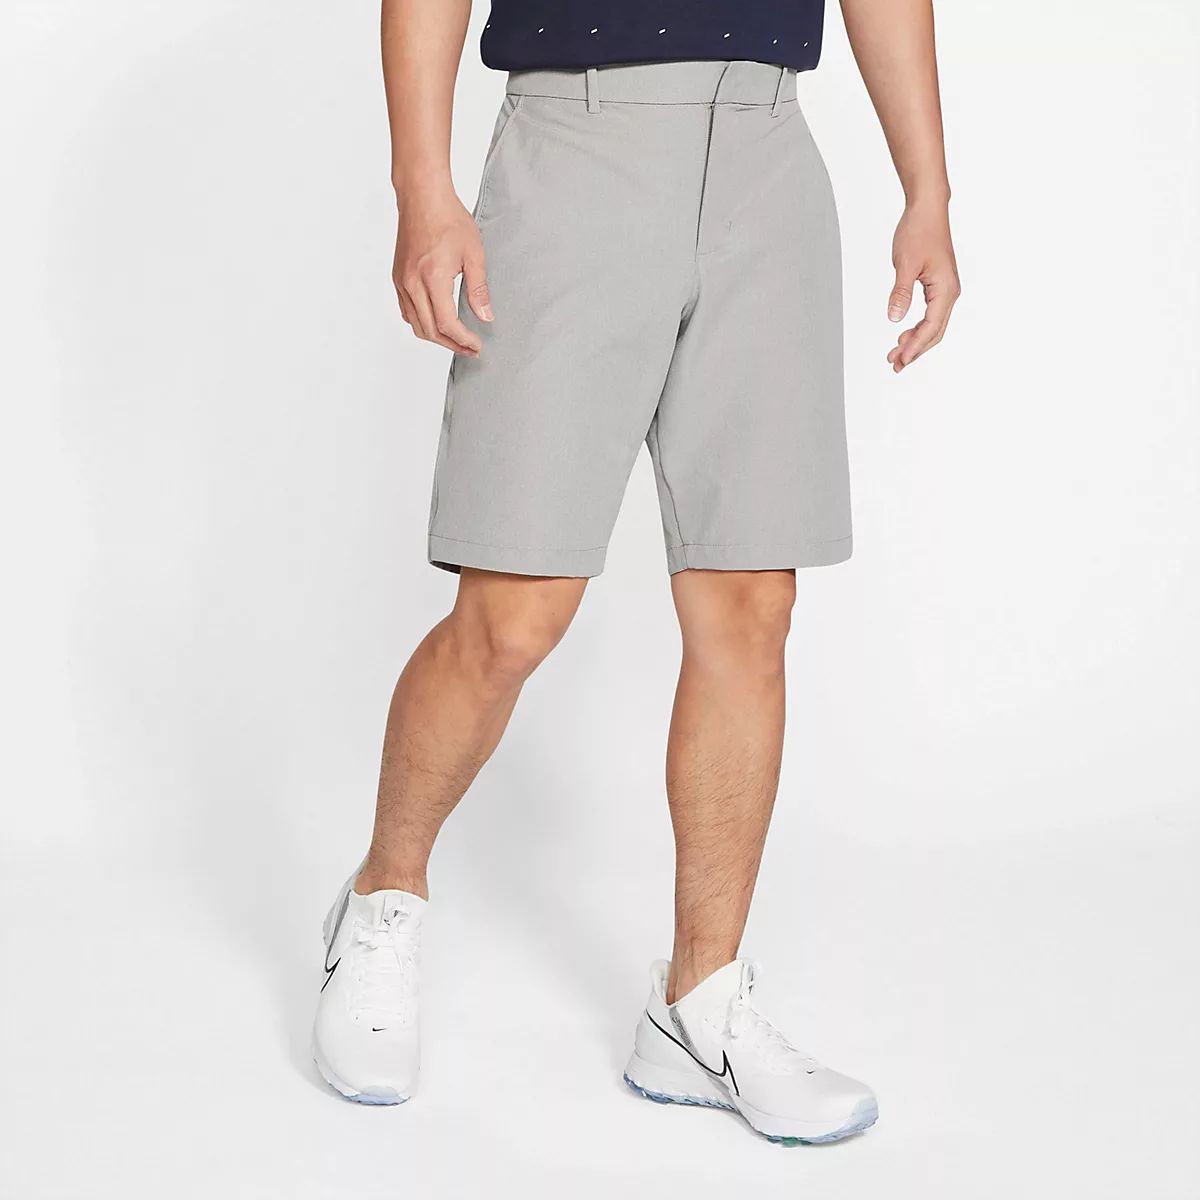 Nike Men's Flex Hybrid Golf Shorts | Free Shipping at Academy | Academy Sports + Outdoors